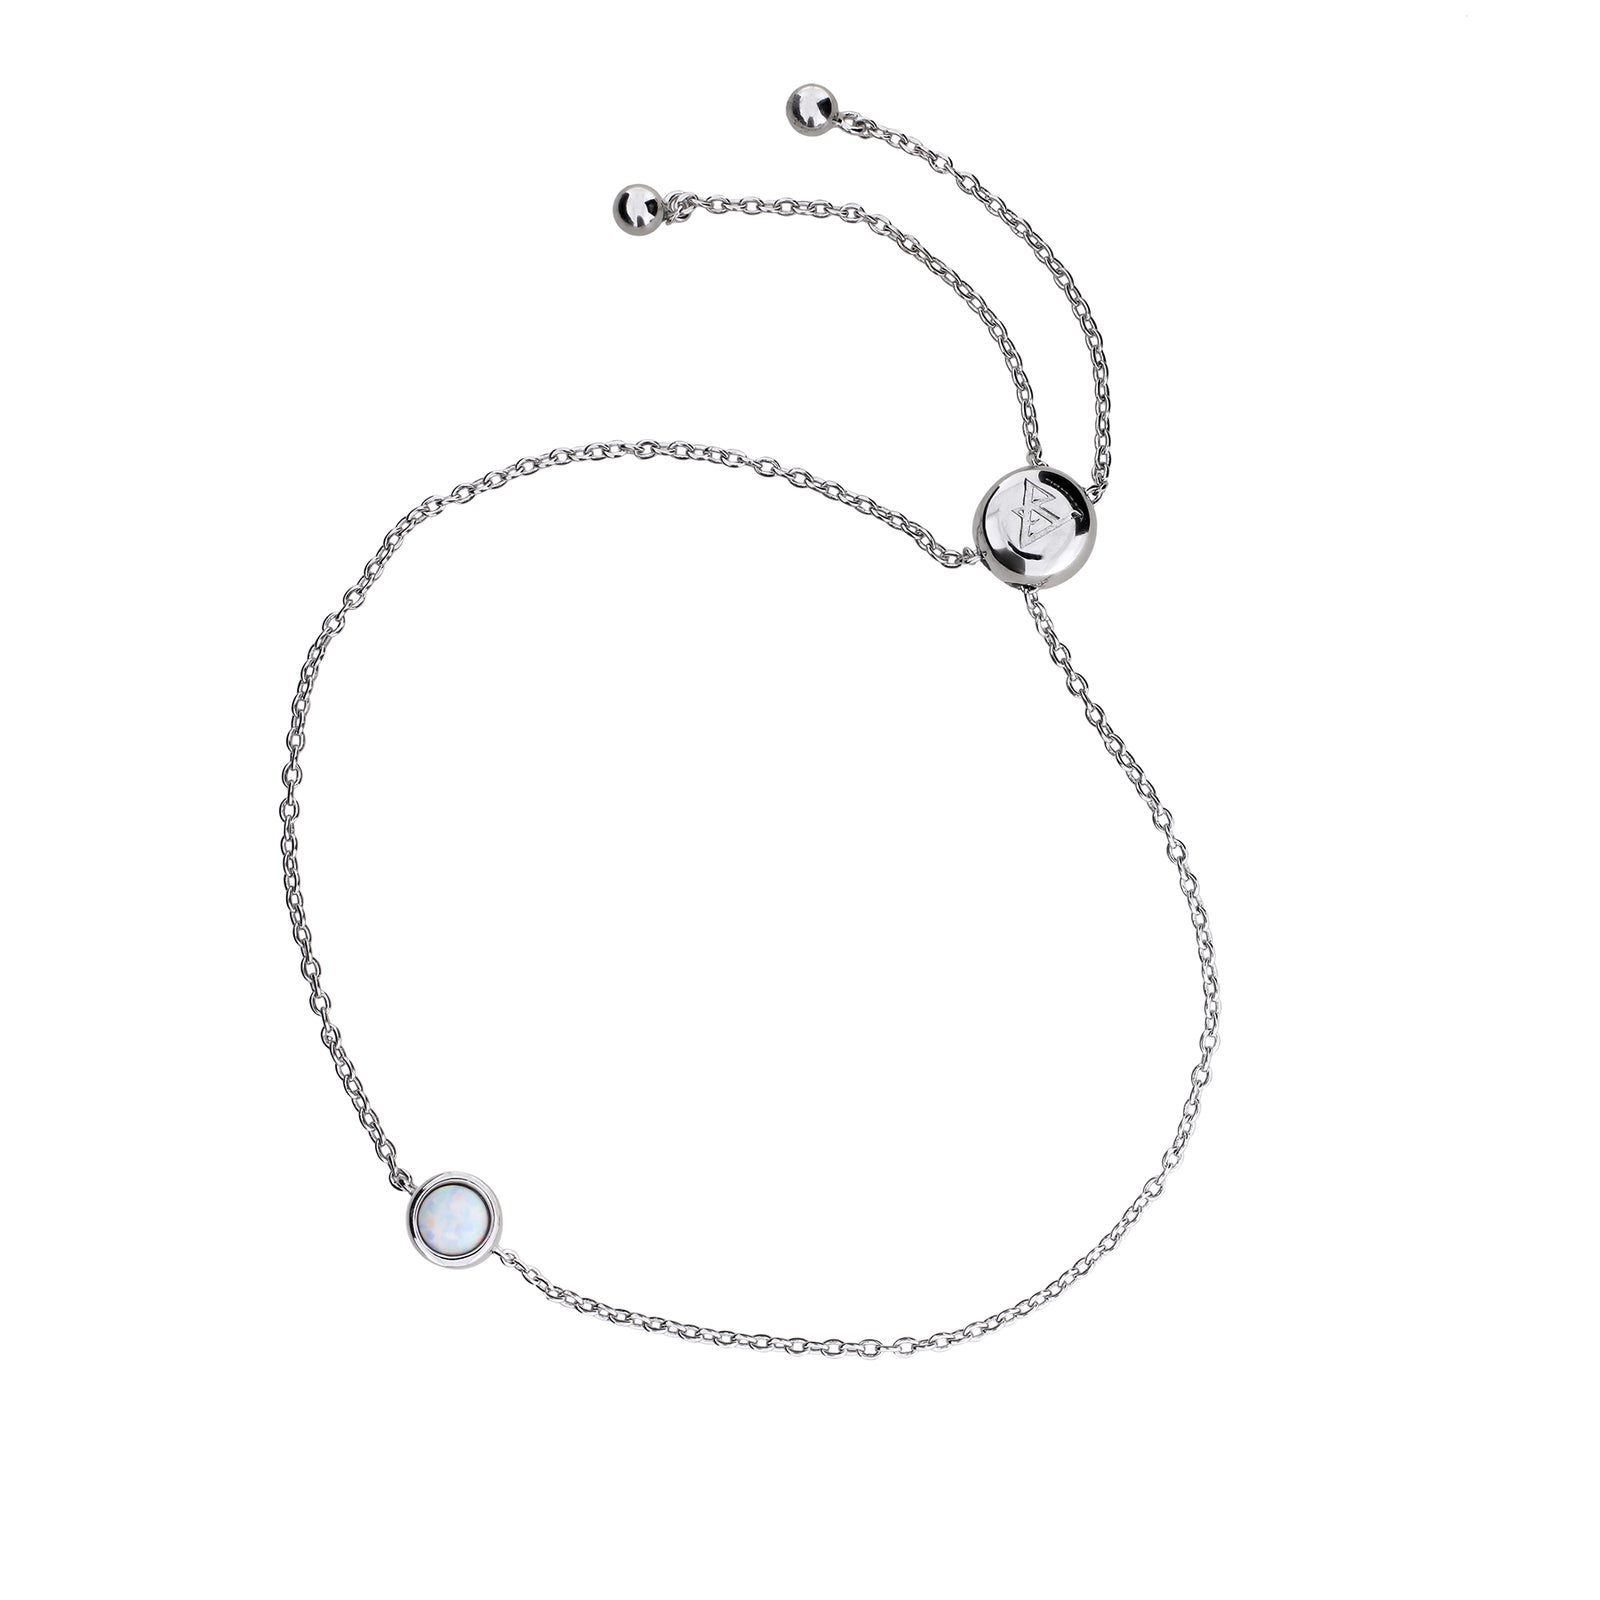 October Birthstone Bracelet - Opal